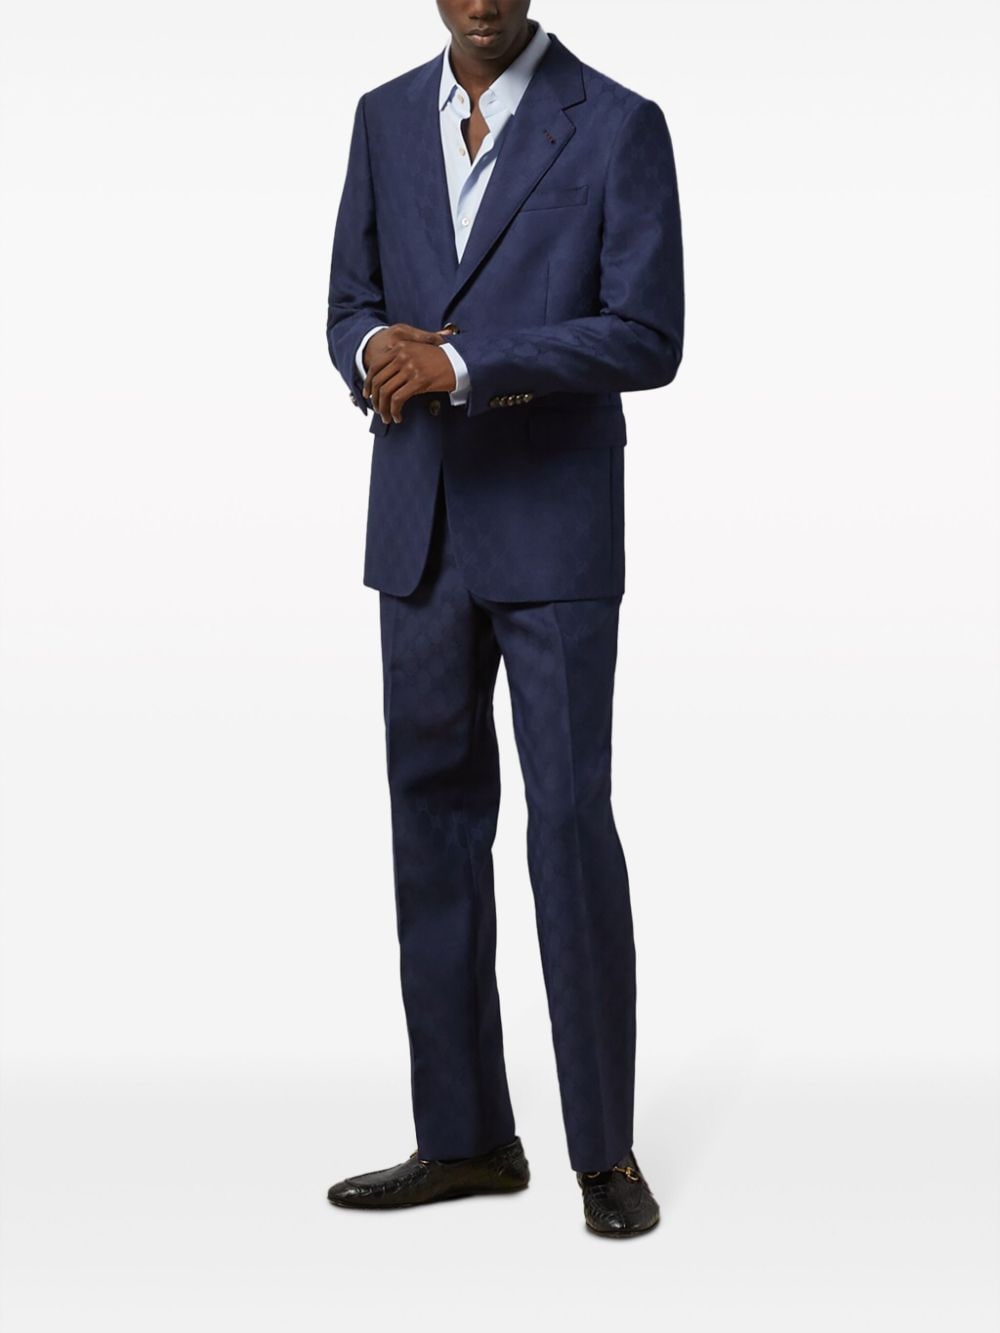 GUCCI Navy Blue GG Damier-Jacquard Wool Suit for Men